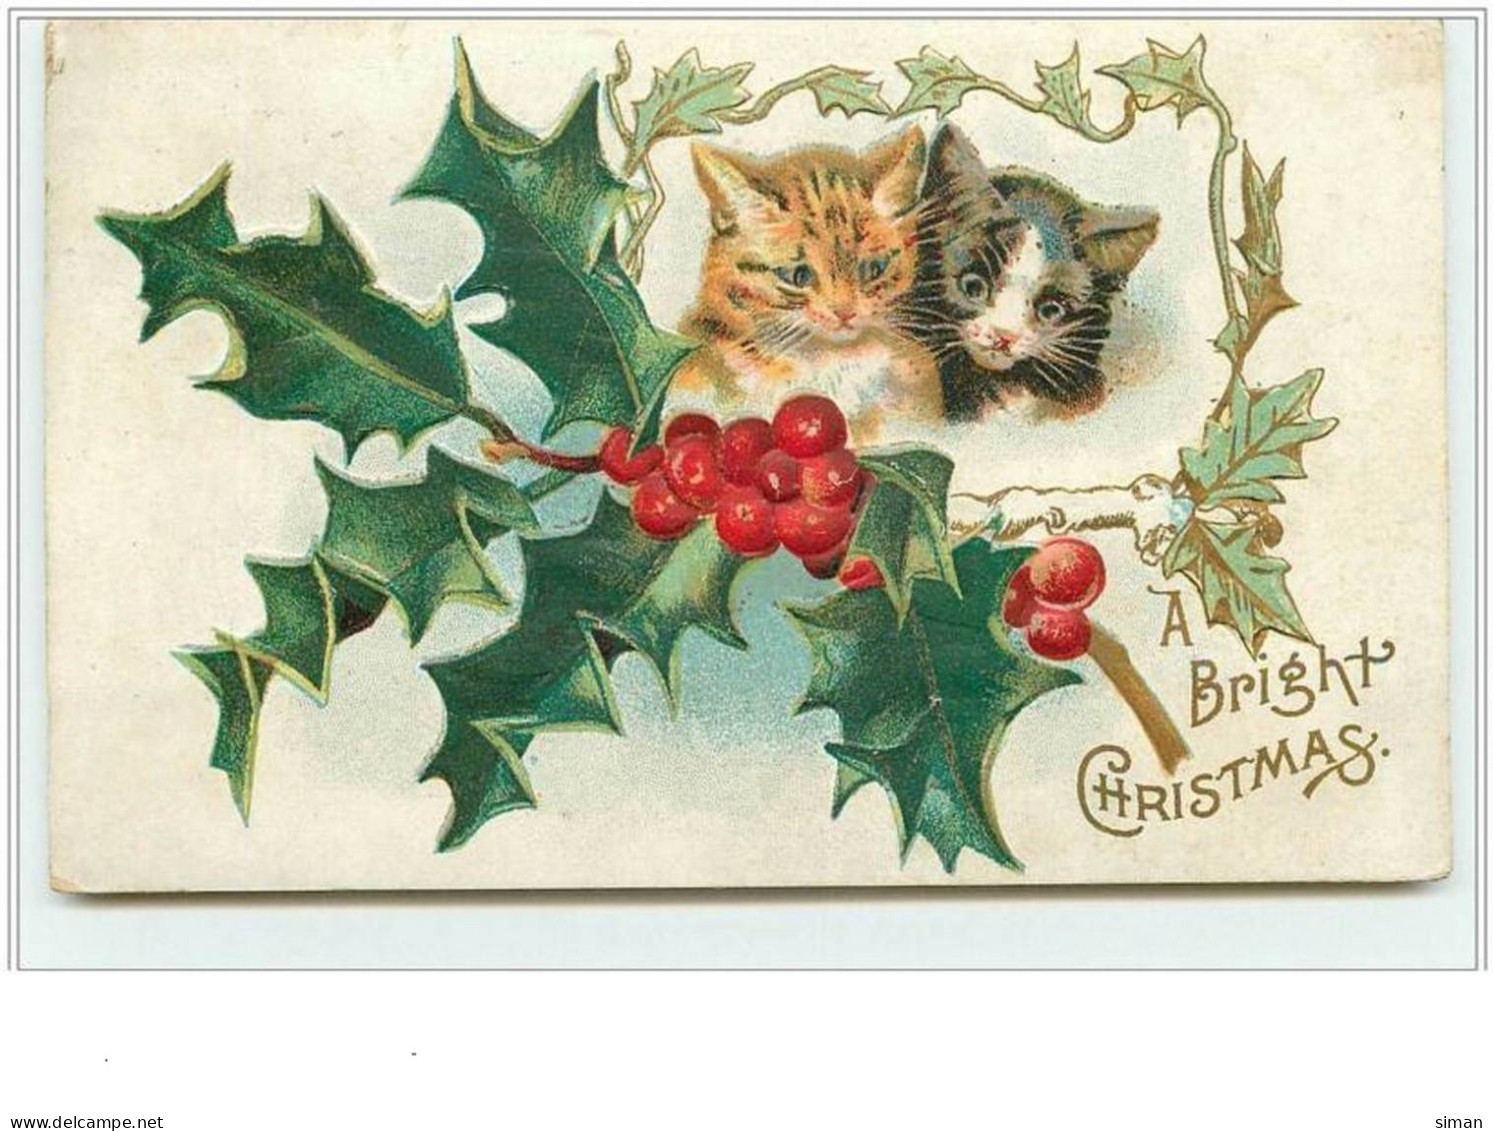 N°2276 - Carte Gaufrée - A Bright Christmas - Chats - Cats